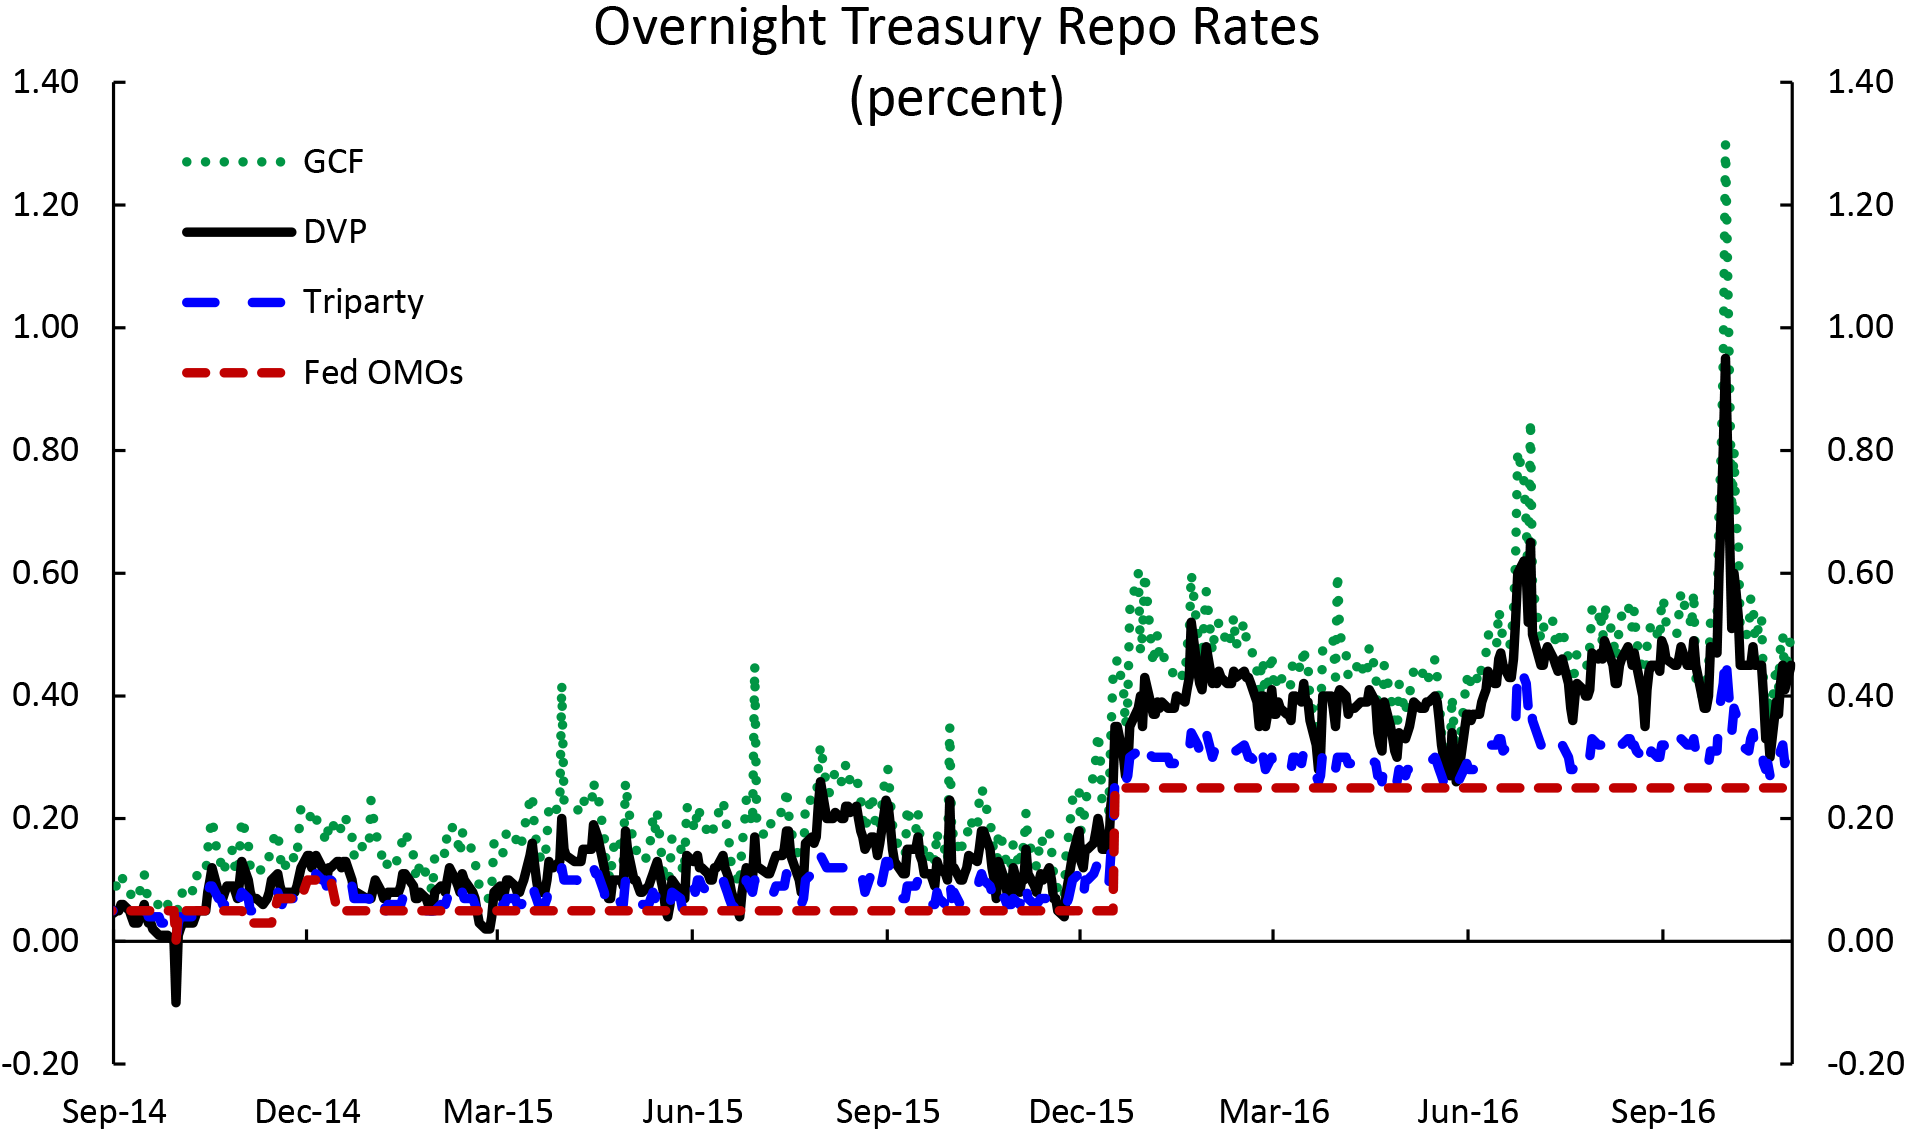 Figure 2: Overnight Treasury Repo Rates. See accessible link for data description.